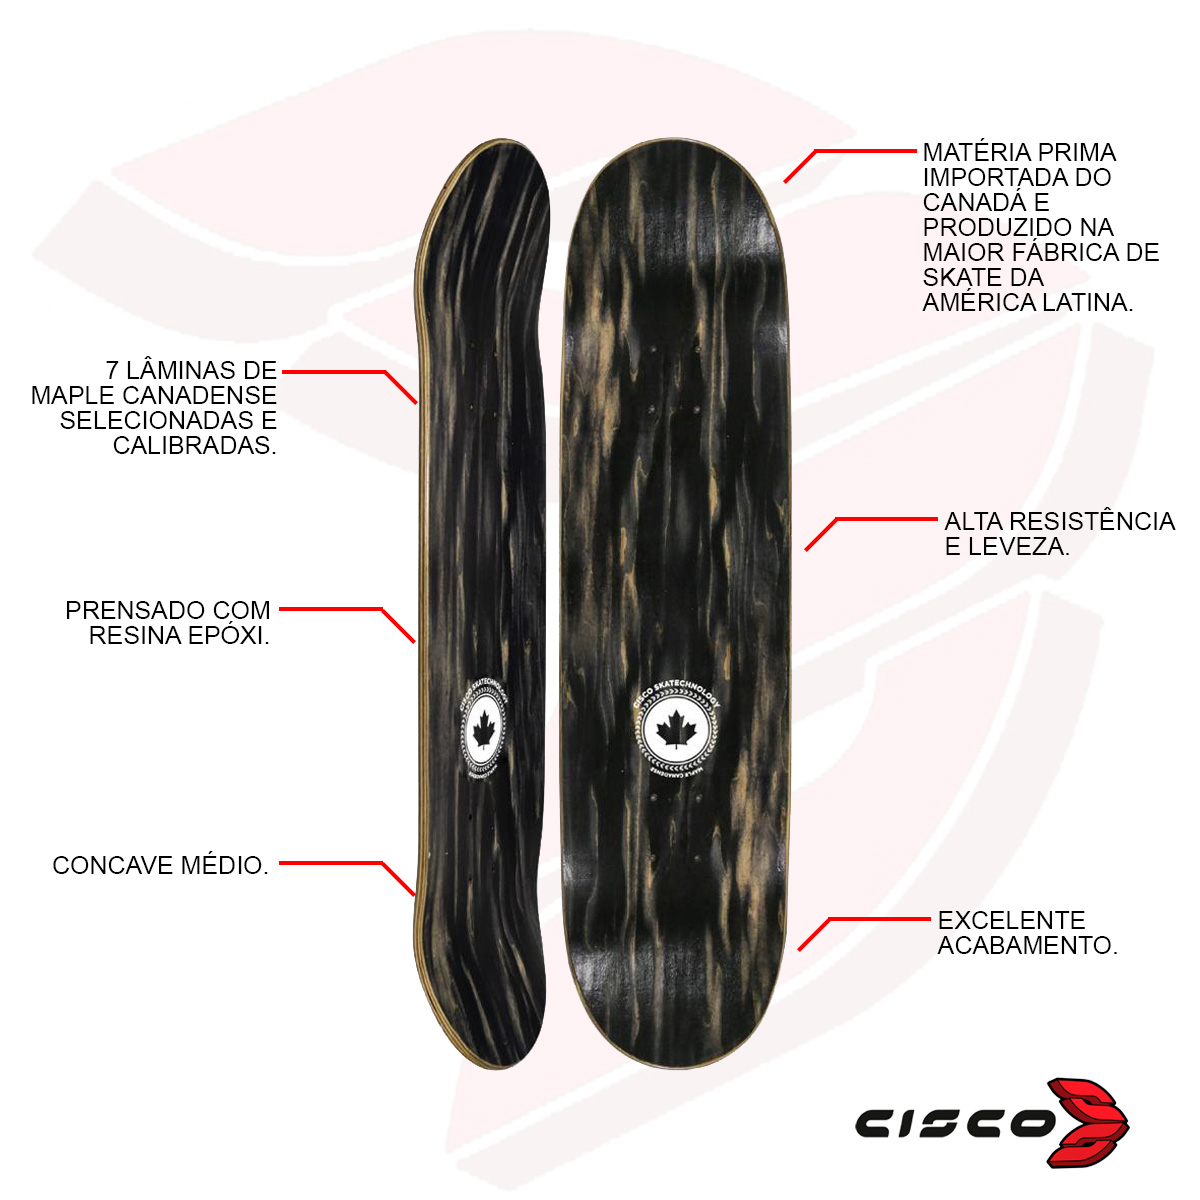 Shape Cisco Skate Maple Canadense Importado Liso + Parafuso de Base